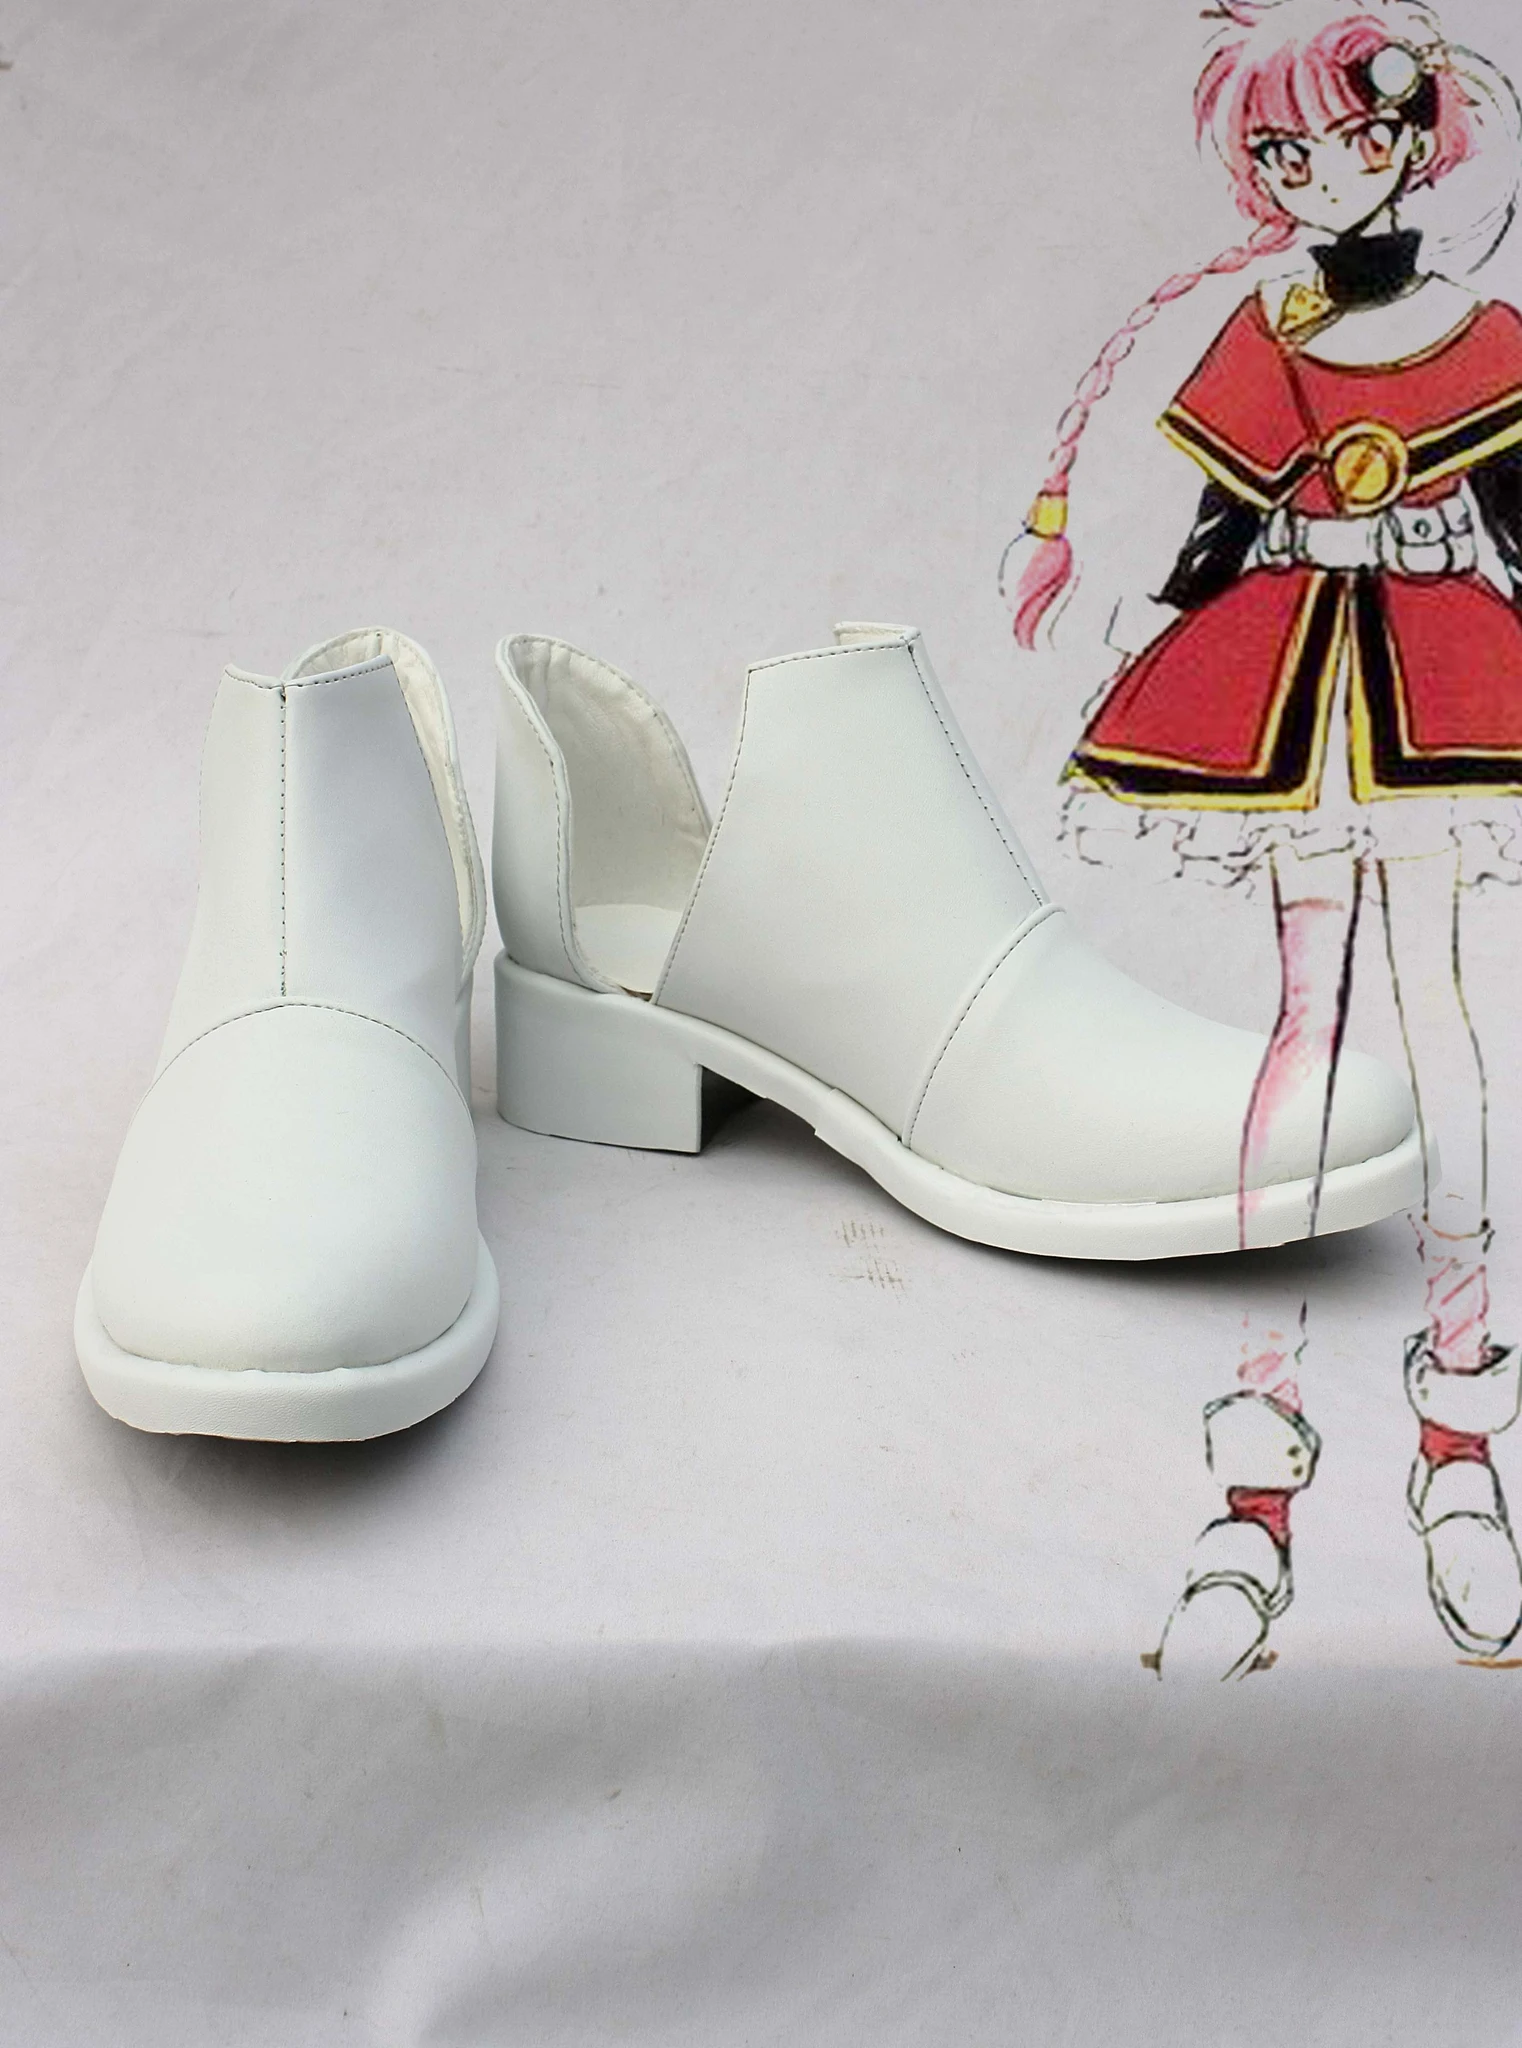 Magic Knight Rayearth Hikaru Shidou Cosplay Shoes Boots